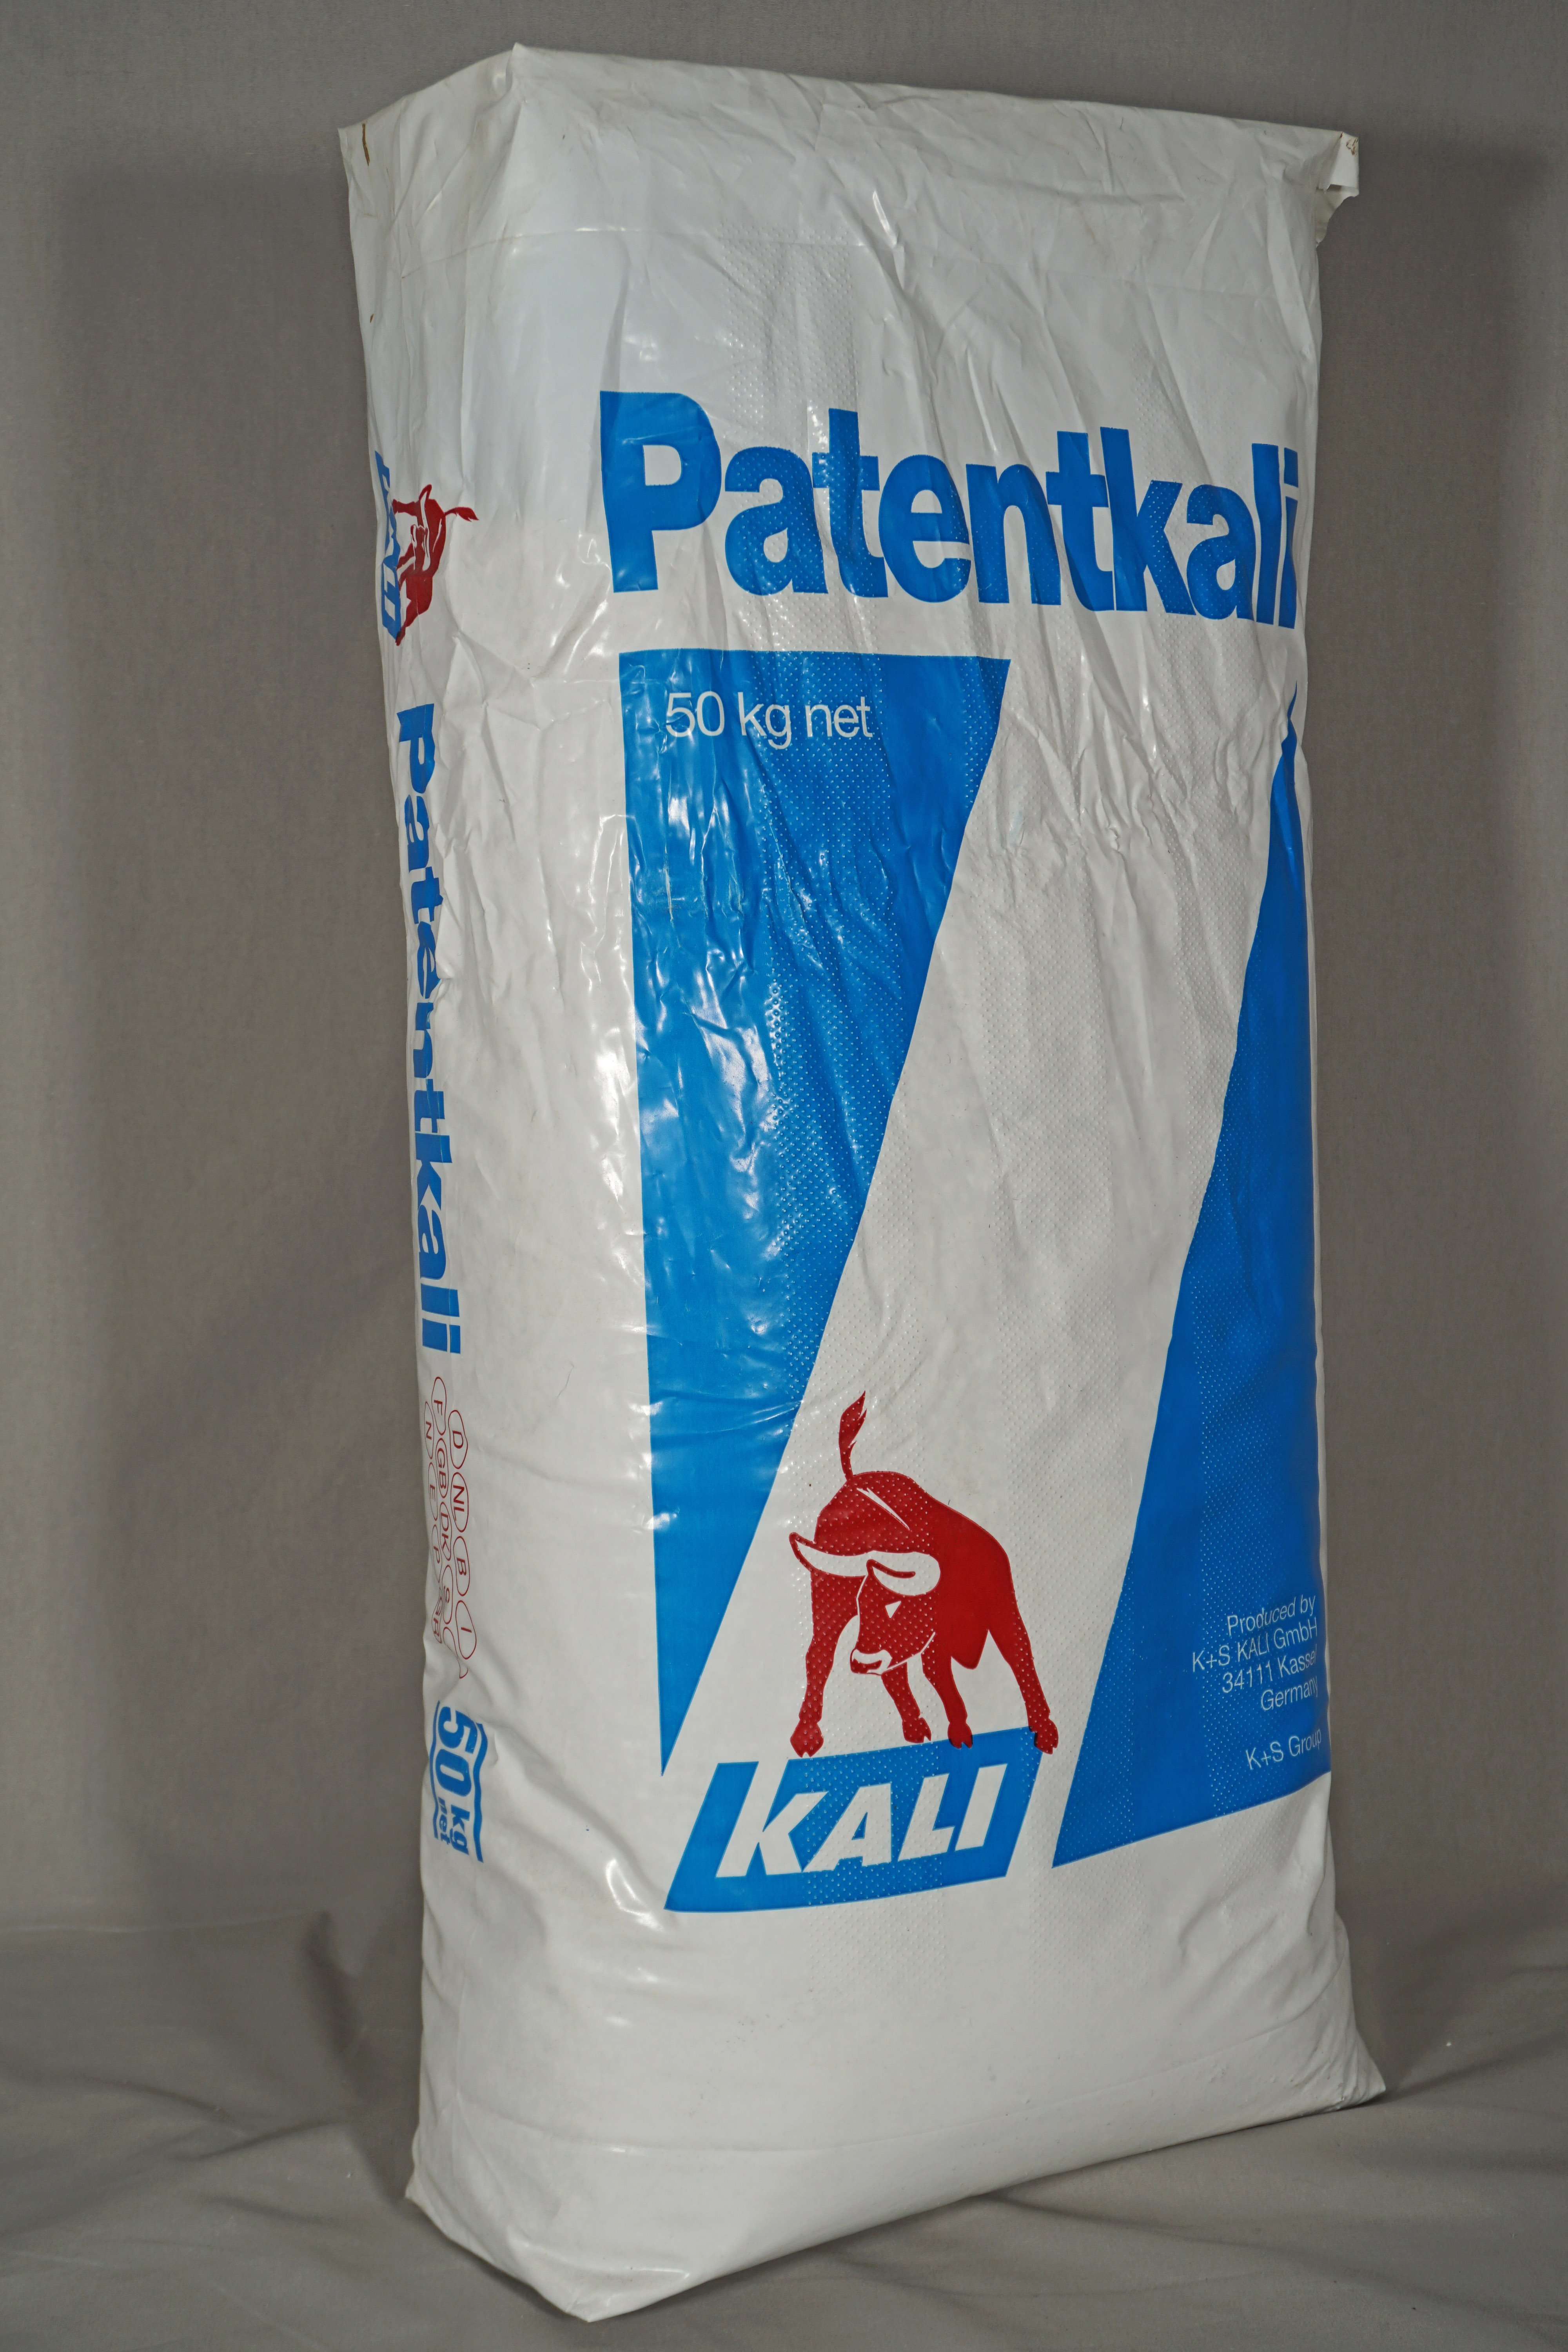 Kunststoffsack für Patentkali (K+S KALI GmbH) (Werra-Kalibergbau-Museum, Heringen/W. CC BY-NC-SA)